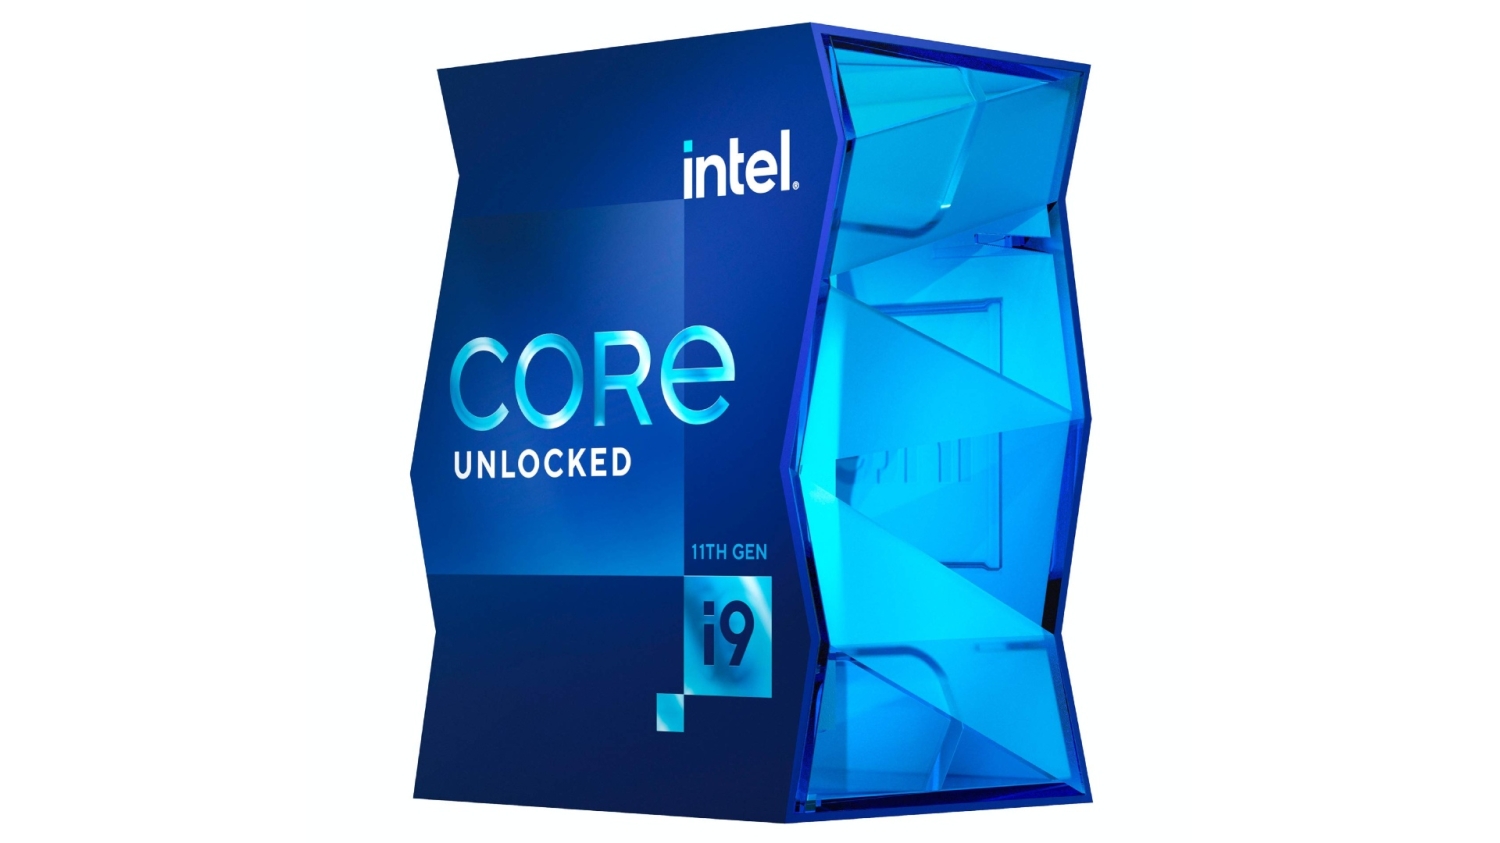 TweakTown Enlarged Image - Intel Core i9-11900K Desktop Processor 8 Cores up to 5.3 GHz